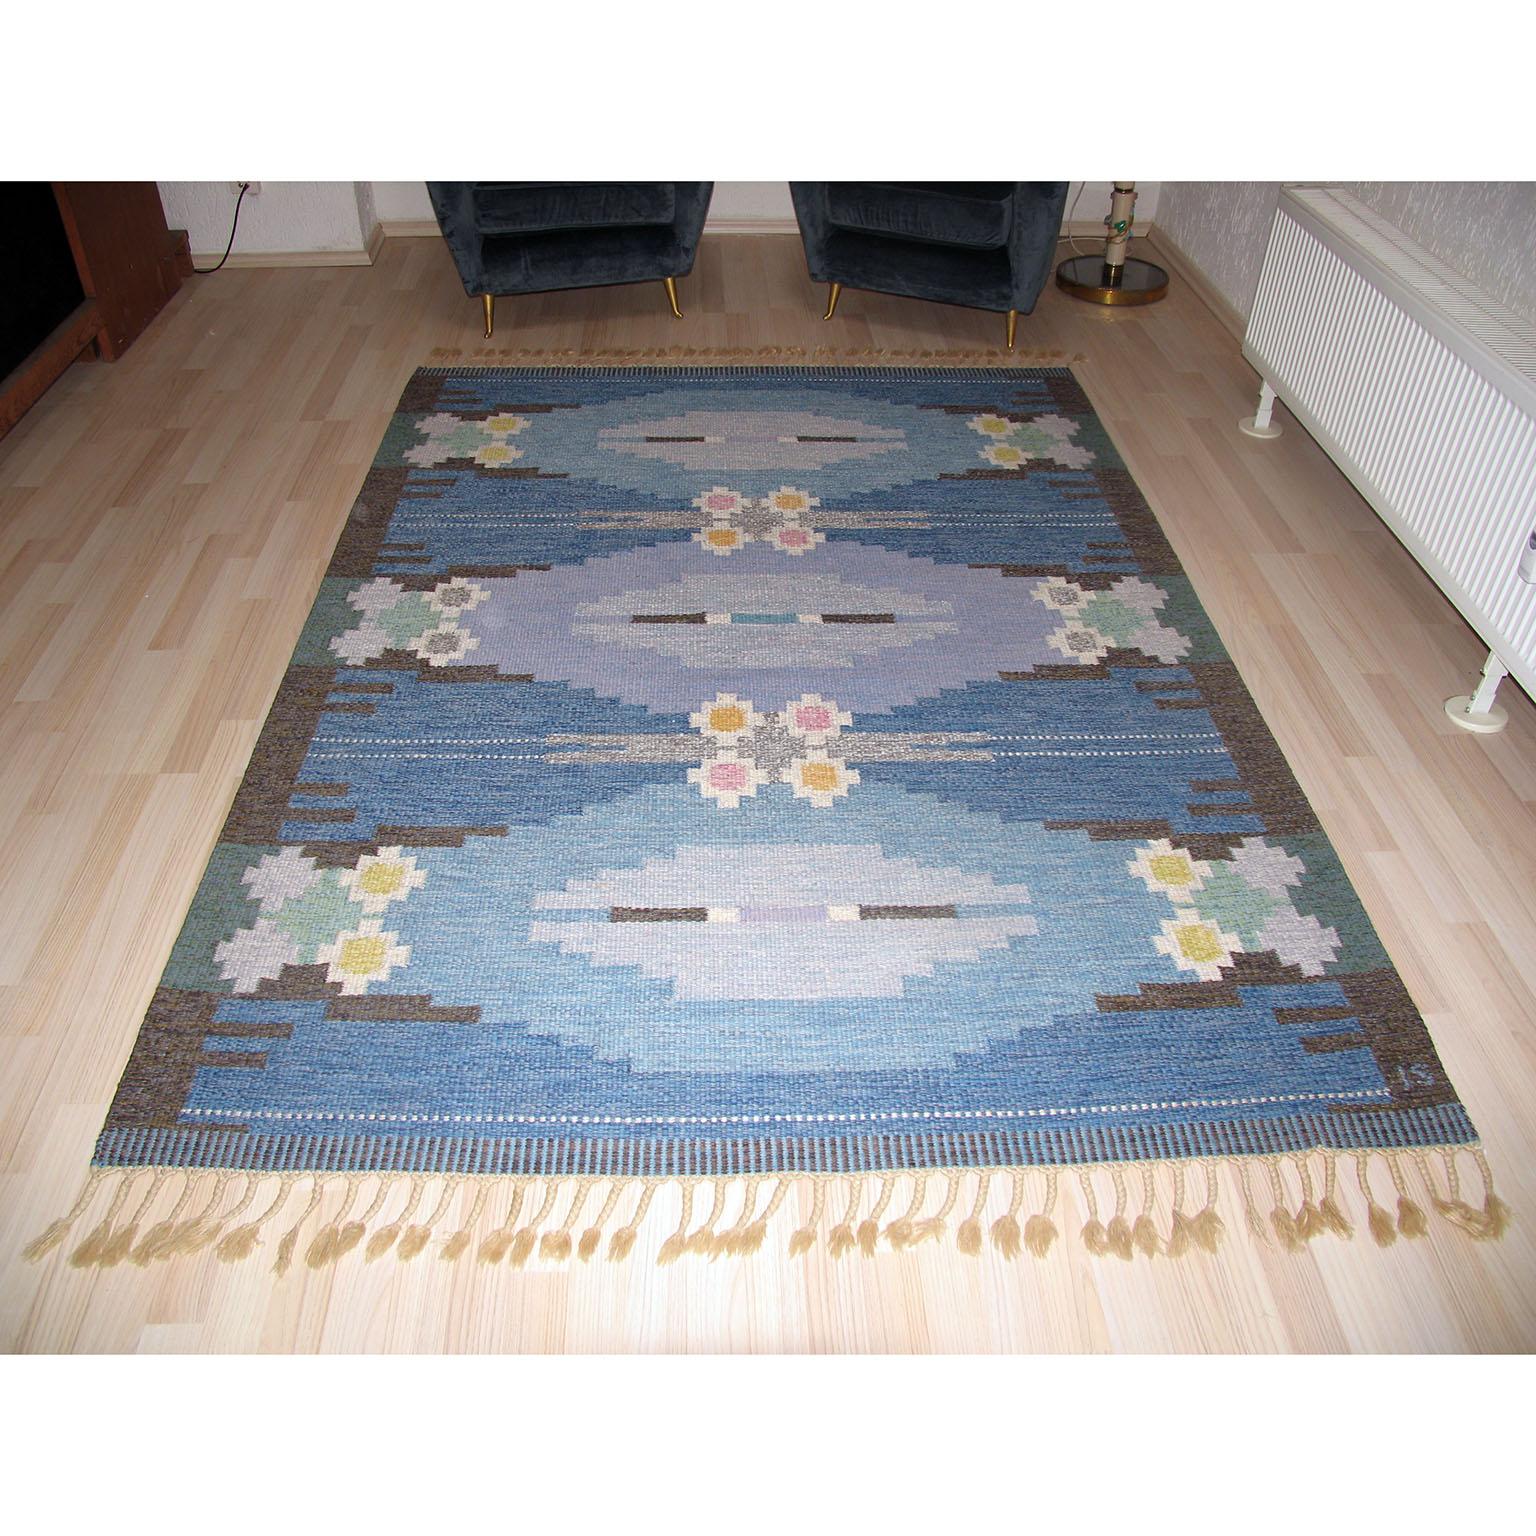 Mid-century Swedish Kilim Röllakan rug by Ingegerd Silow.
Kilim rug, Rollakan, flat-weave rug, by Ingegerd Silow, Sweden, 1960s.
Excellent condition, as new, 